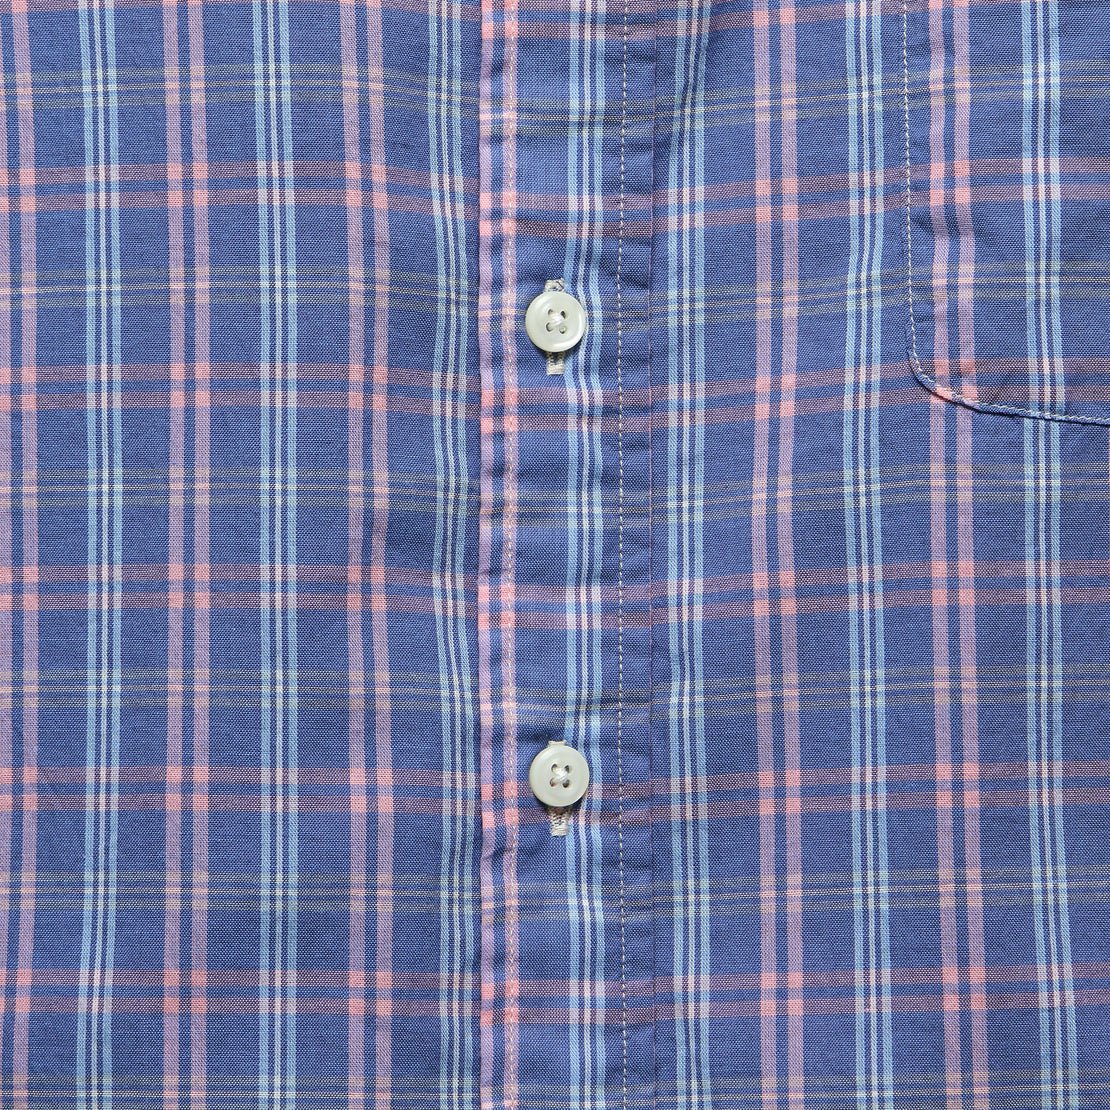 Ventura Shirt - Chambray Blue Plaid - Faherty - STAG Provisions - Tops - L/S Woven - Plaid